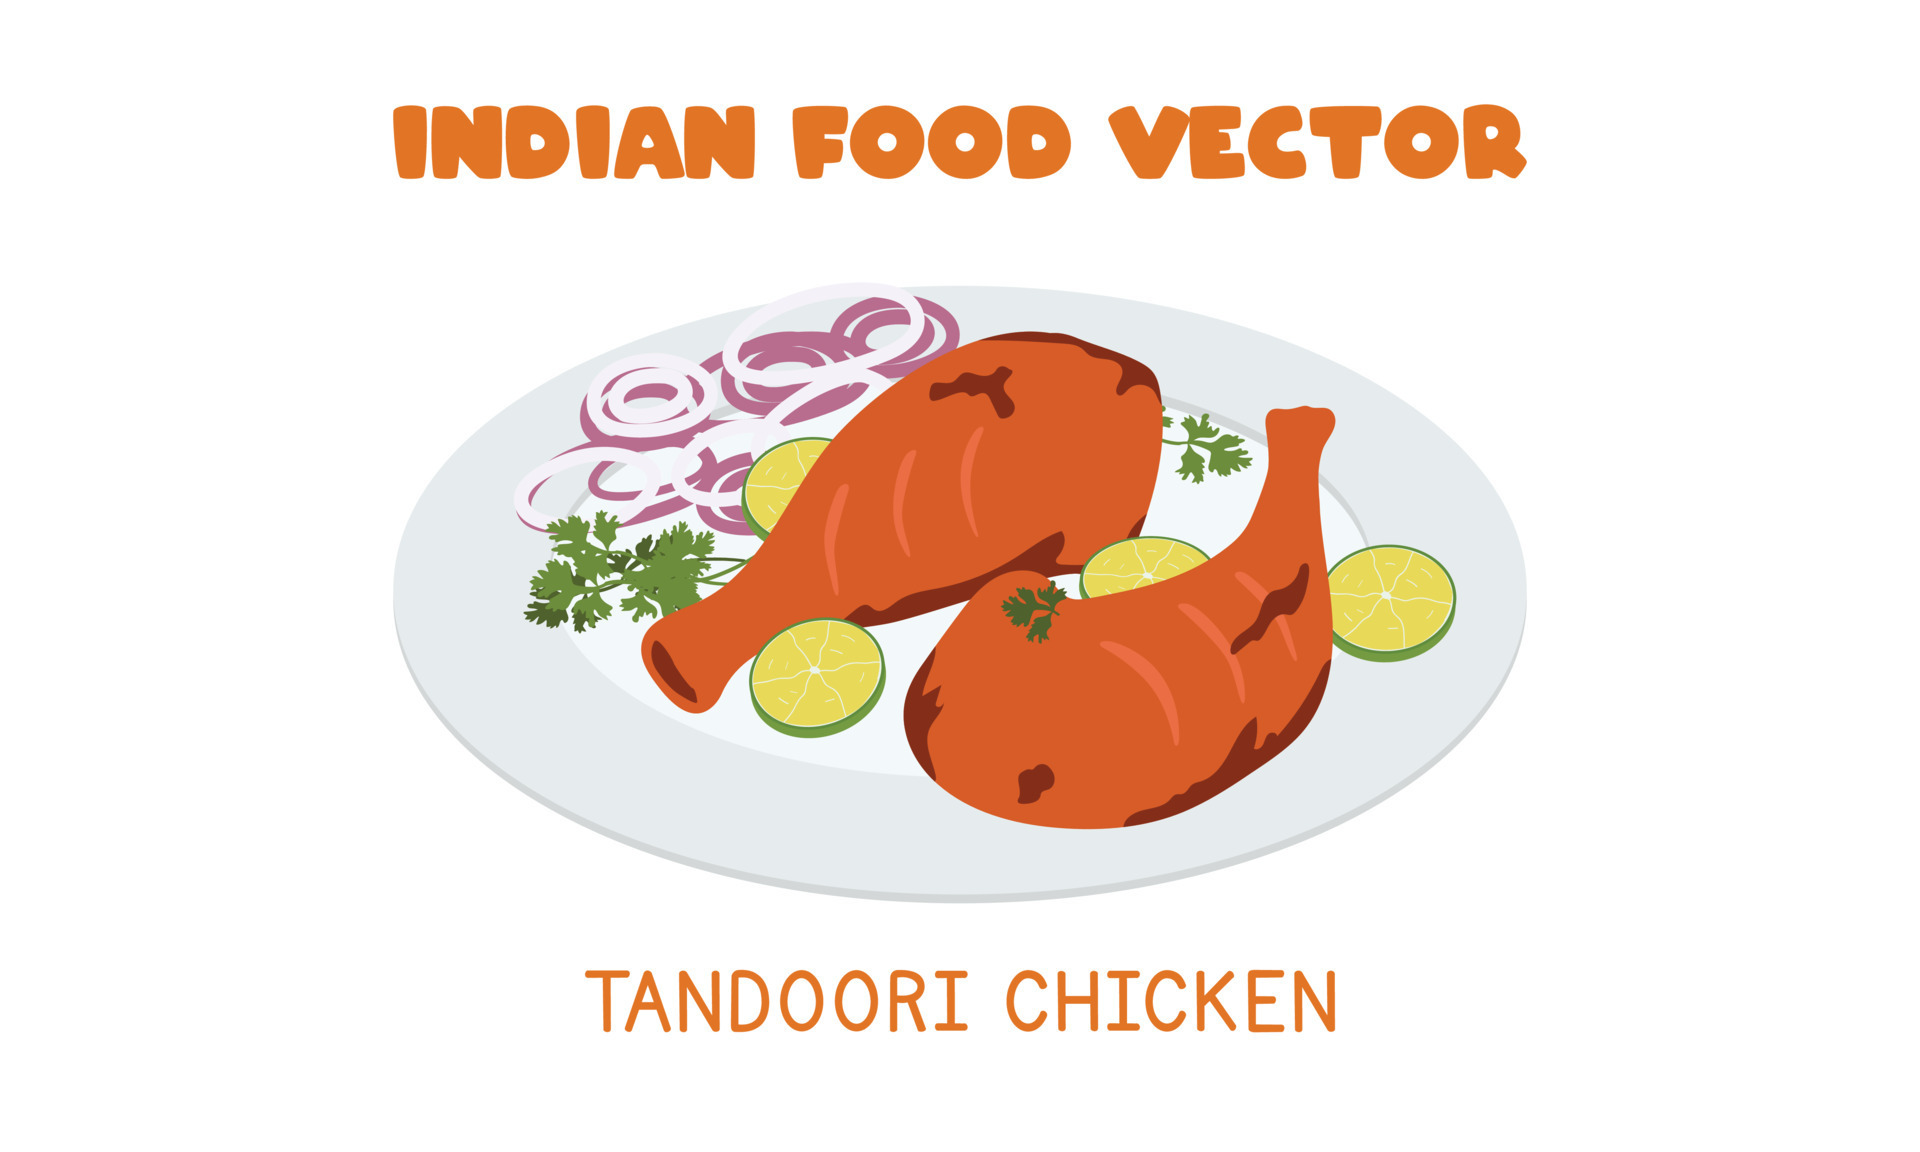 Indian Tandoori Chicken - Indian famous roasted chicken dish flat vector  illustration isolated on white background. Tandoori Chicken clipart cartoon.  Asian food. Indian cuisine. Indian food 16084514 Vector Art at Vecteezy